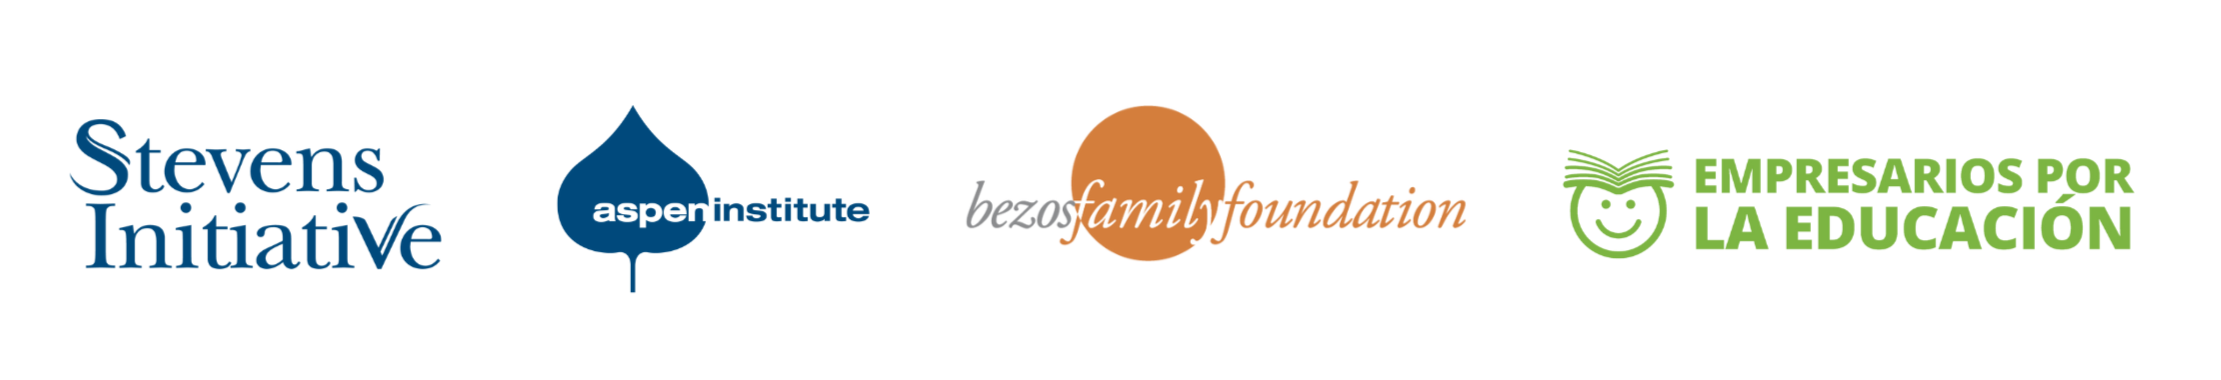 Logos of the Stevens Initiative, Aspen Institute, Bezosfamilyfoundation, and Empresarios por la educacion